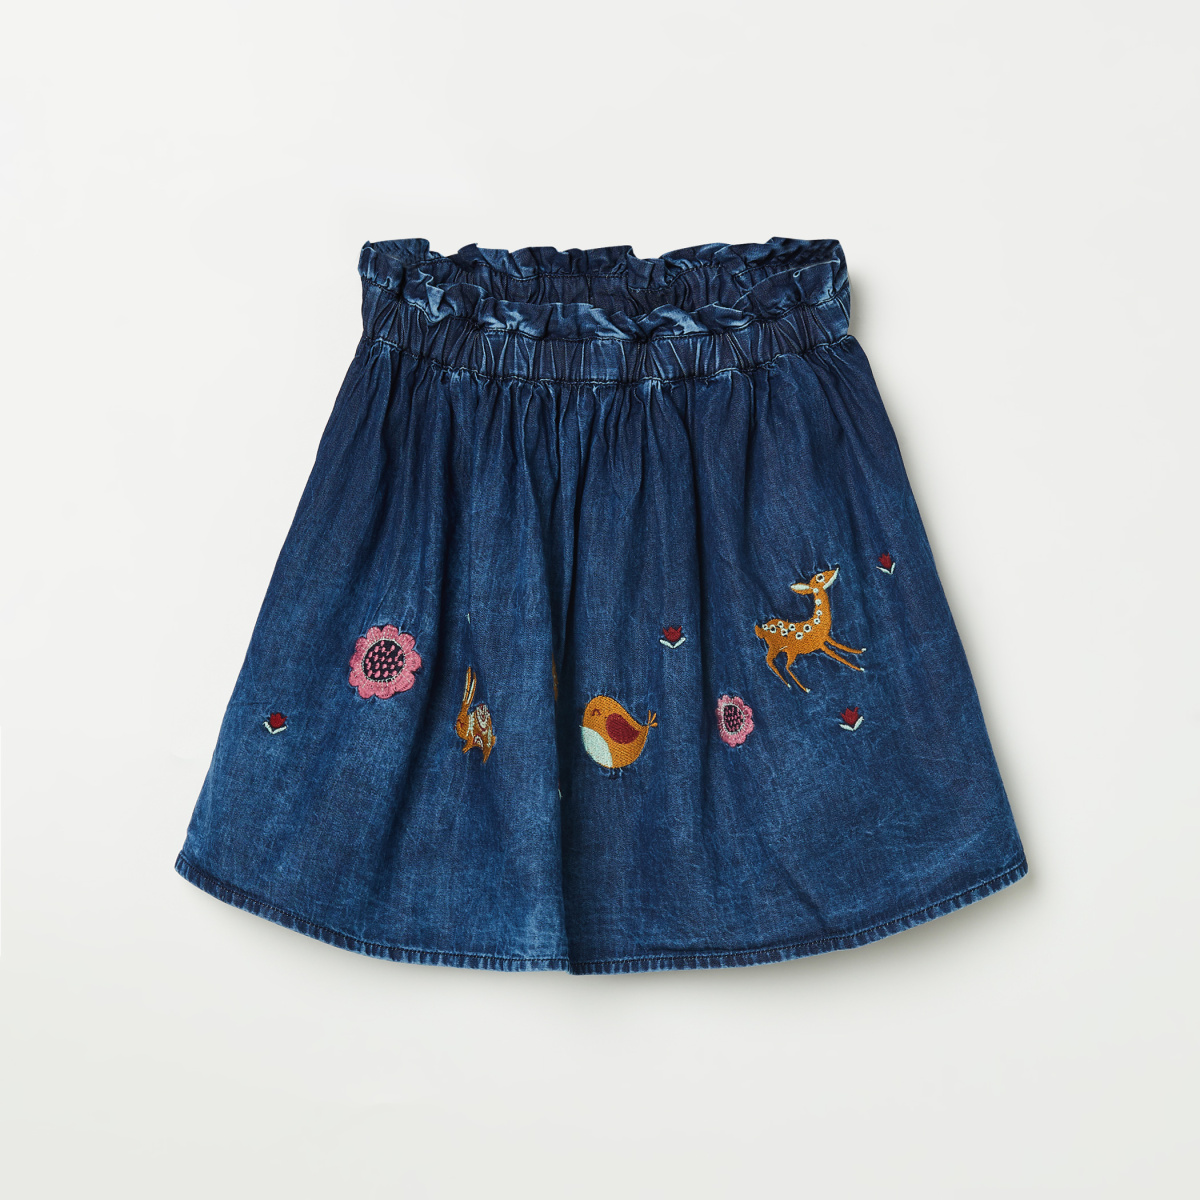 FAME FOREVER KIDS Girls Embroidered A-Line Skirt